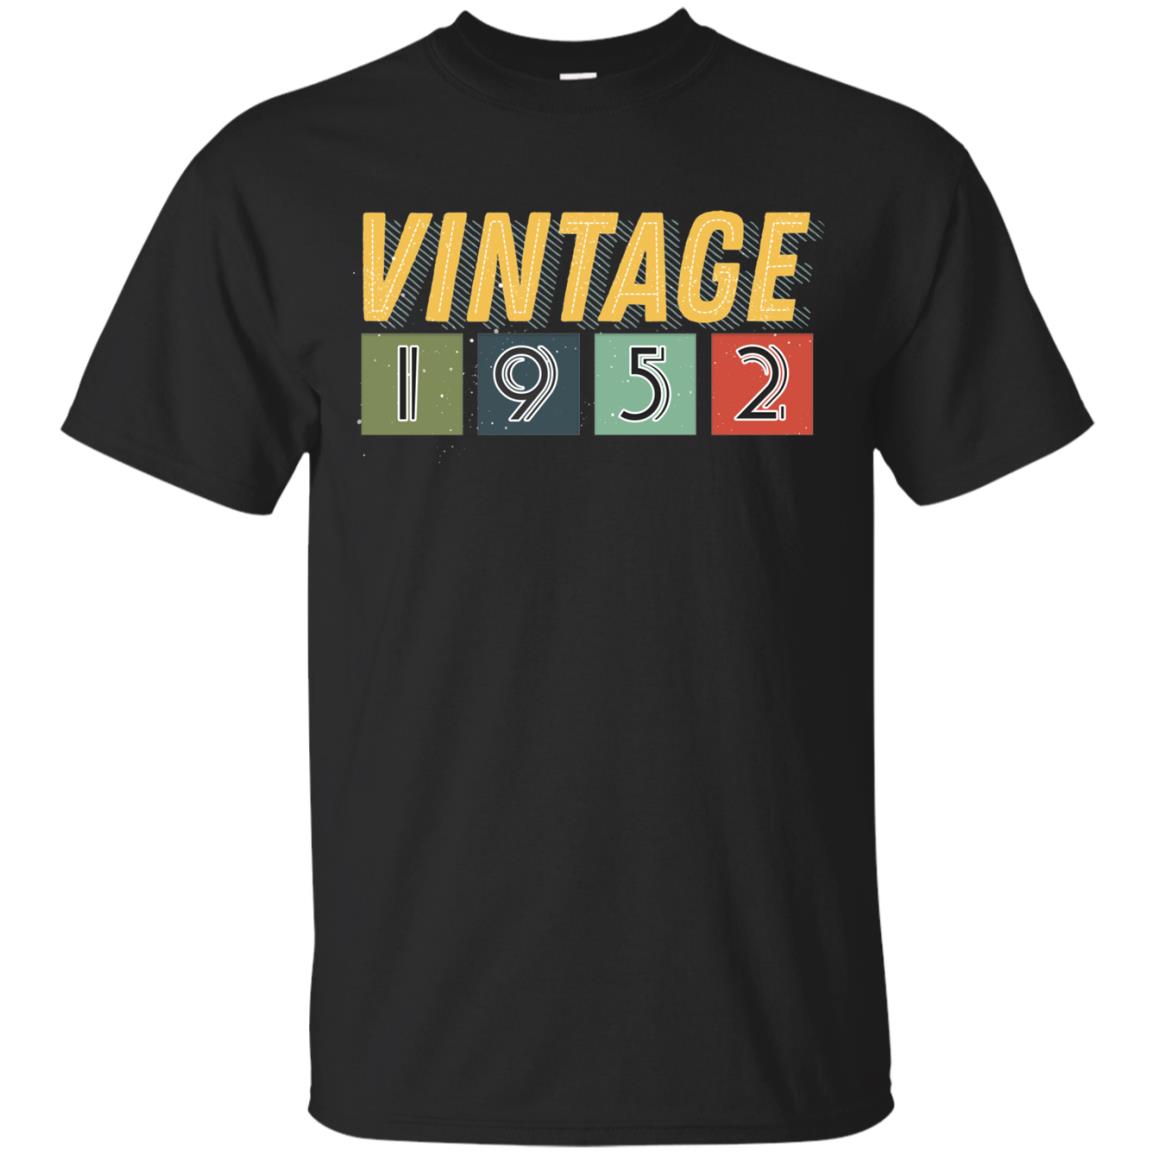 Vintage 1952 66th Birthday Gift Shirt For Mens Or WomensG200 Gildan Ultra Cotton T-Shirt